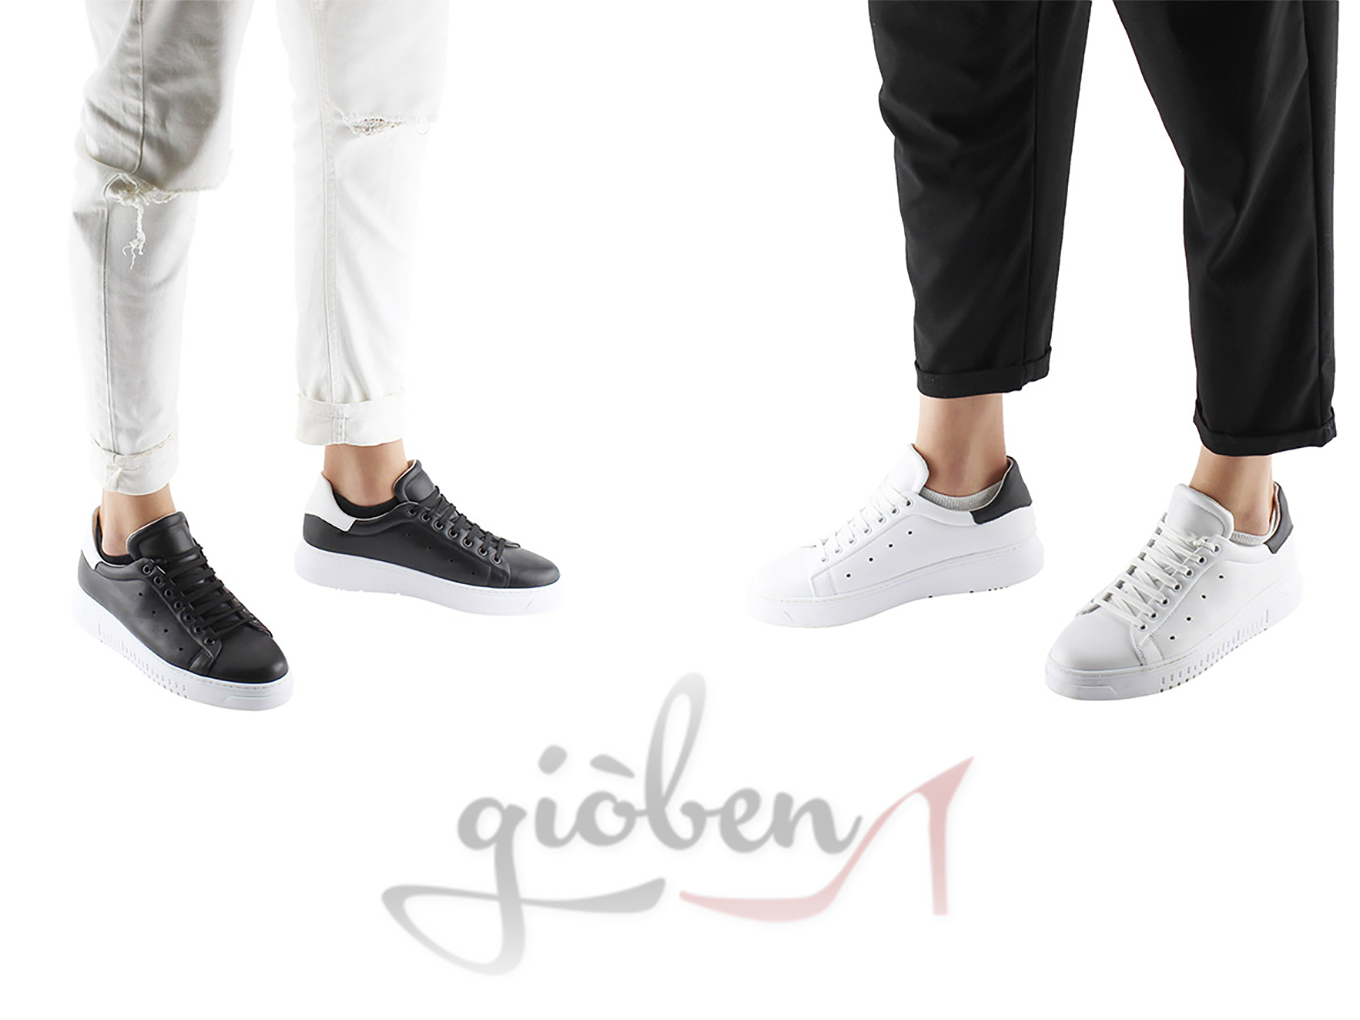 Giòben - Vendita online di scarpe da uomo e da donna made in Italy